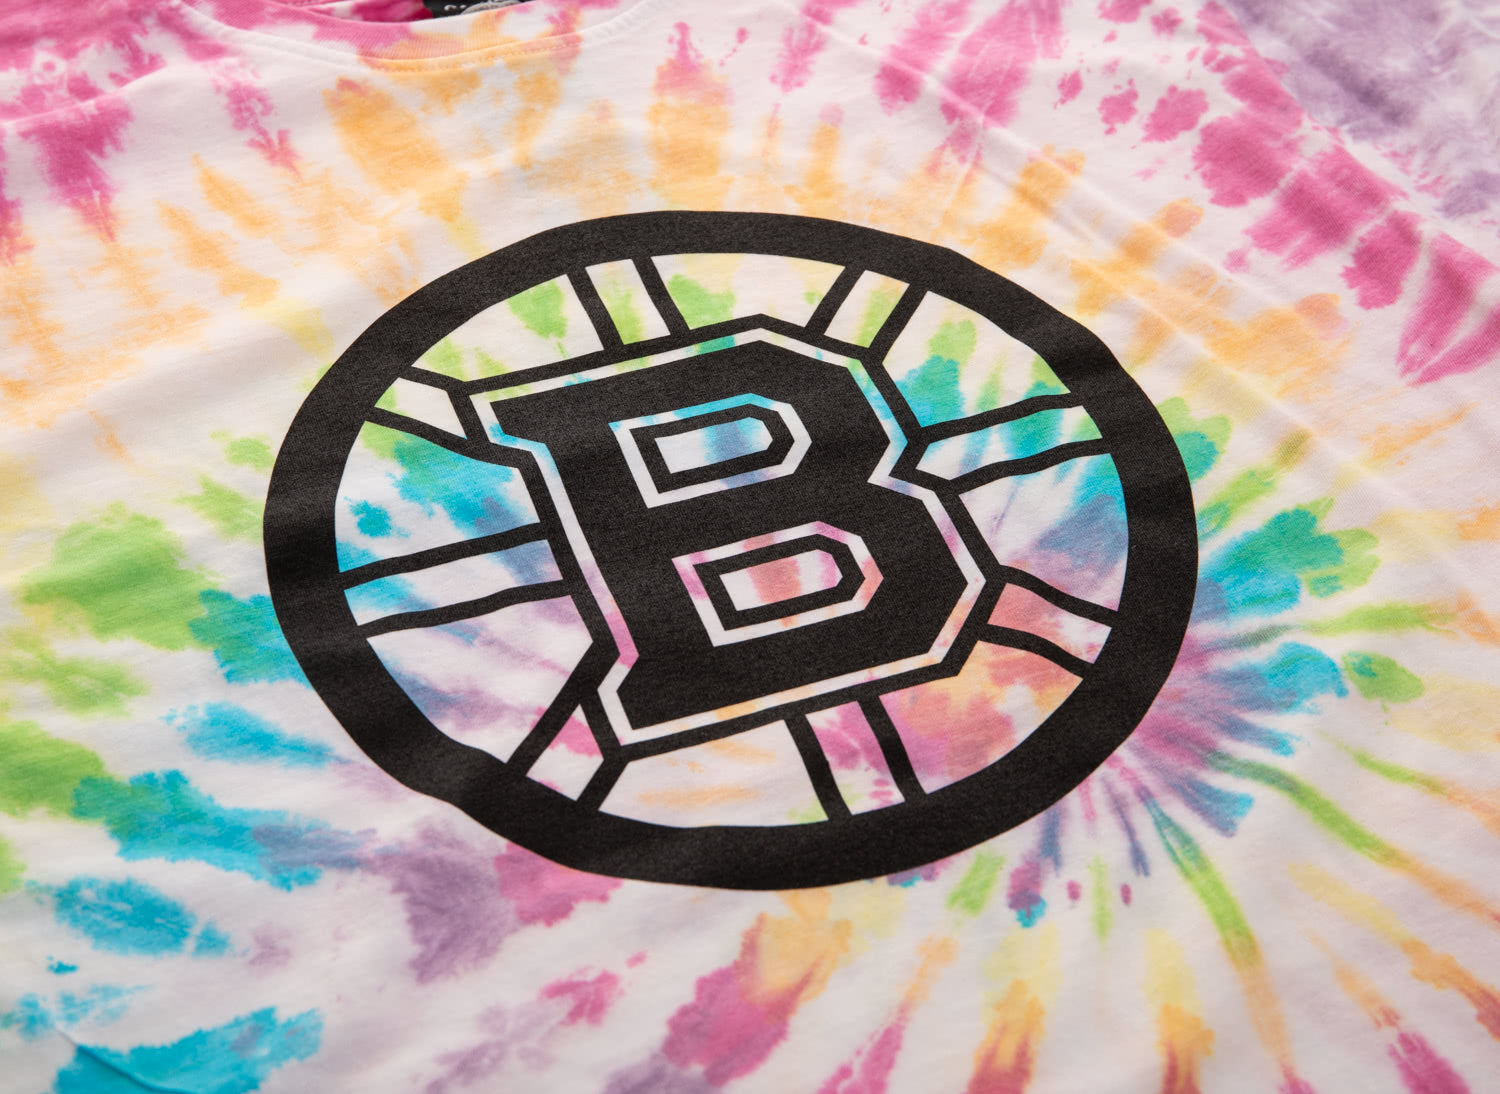 Boston Bruins Pastel Rainbow Tie Dye T-Shirt